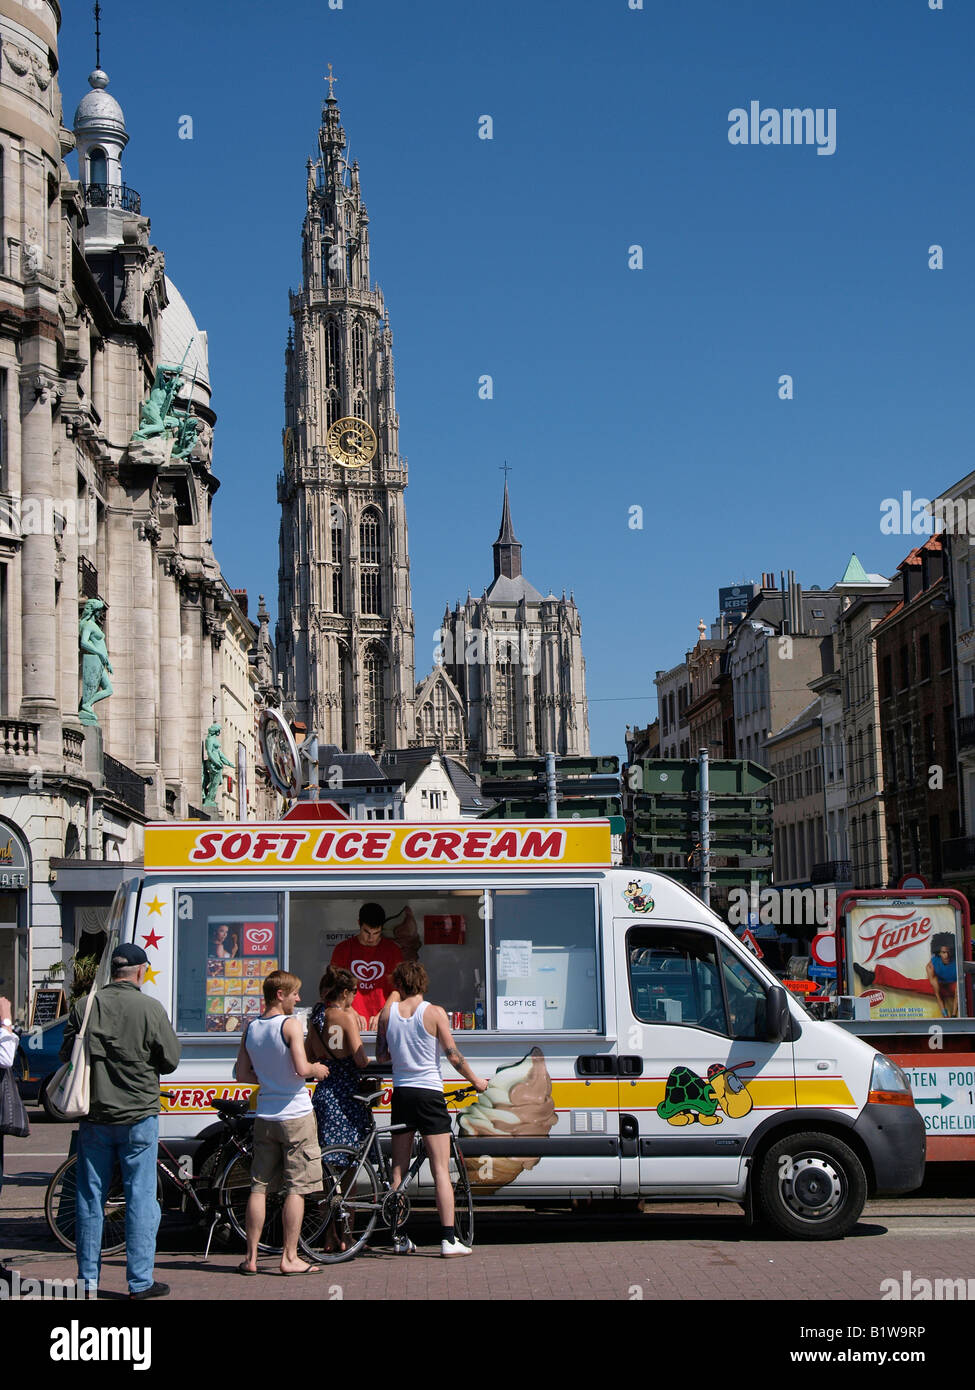 Hospital er nok magasin Soft ice cream van in the historic city center of Antwerp Flanders Belgium  Stock Photo - Alamy